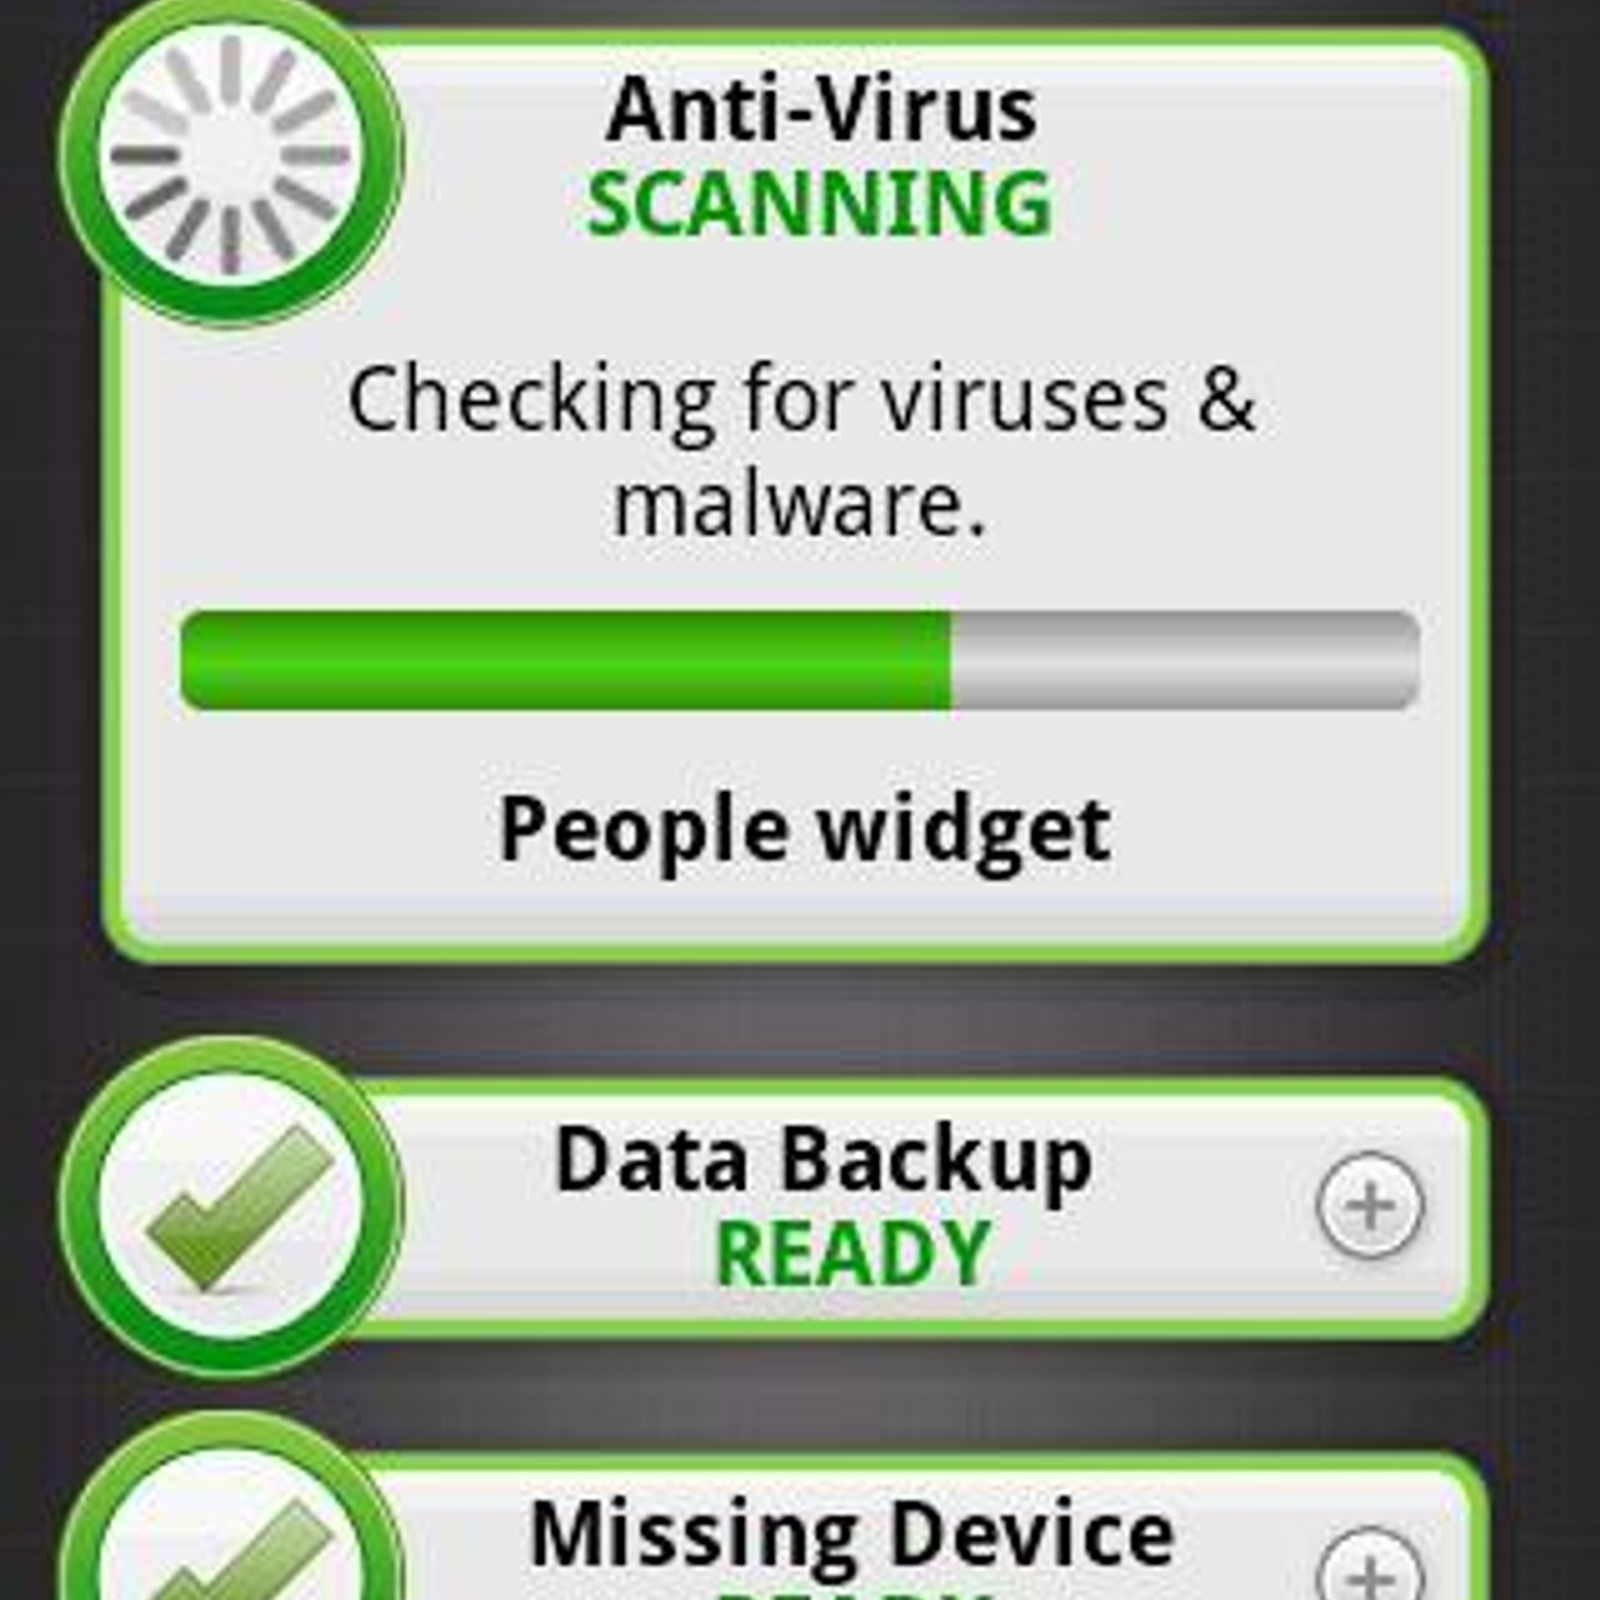 antivirus lookout iphone